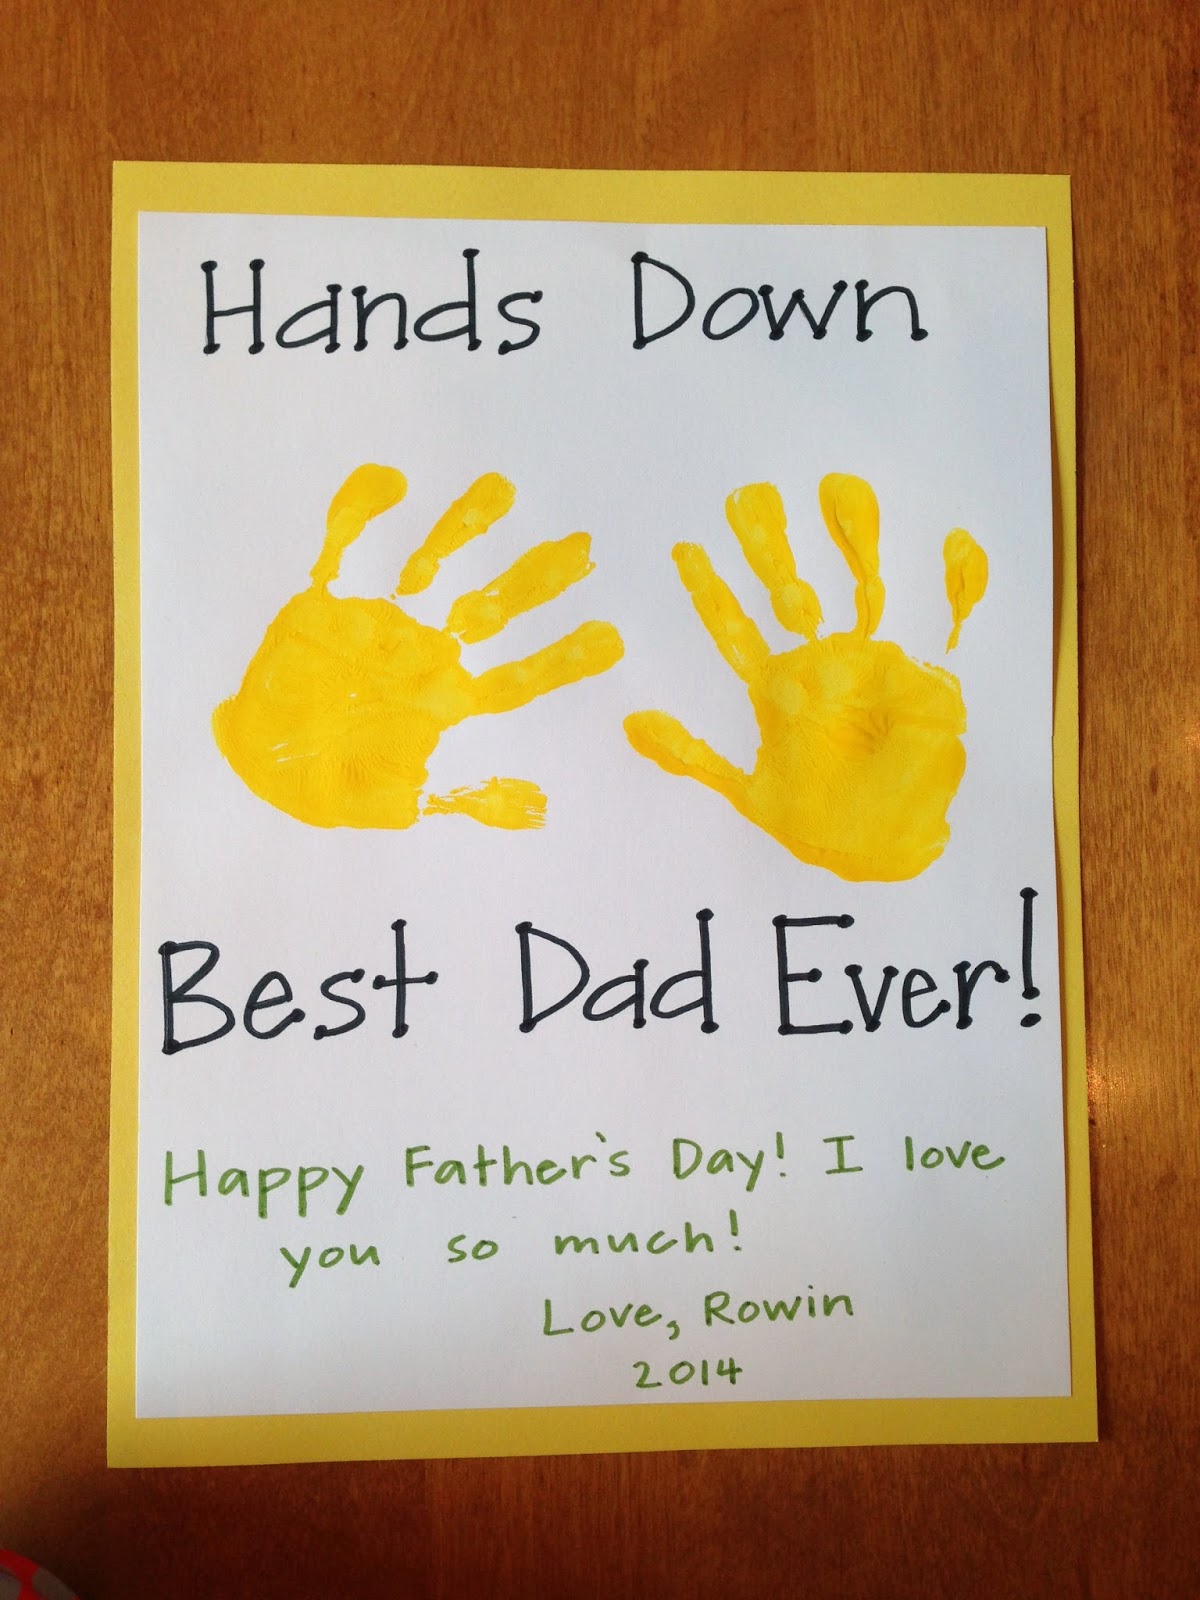 Teach. Play. Love.: Easy Homemade Father's Day Card
